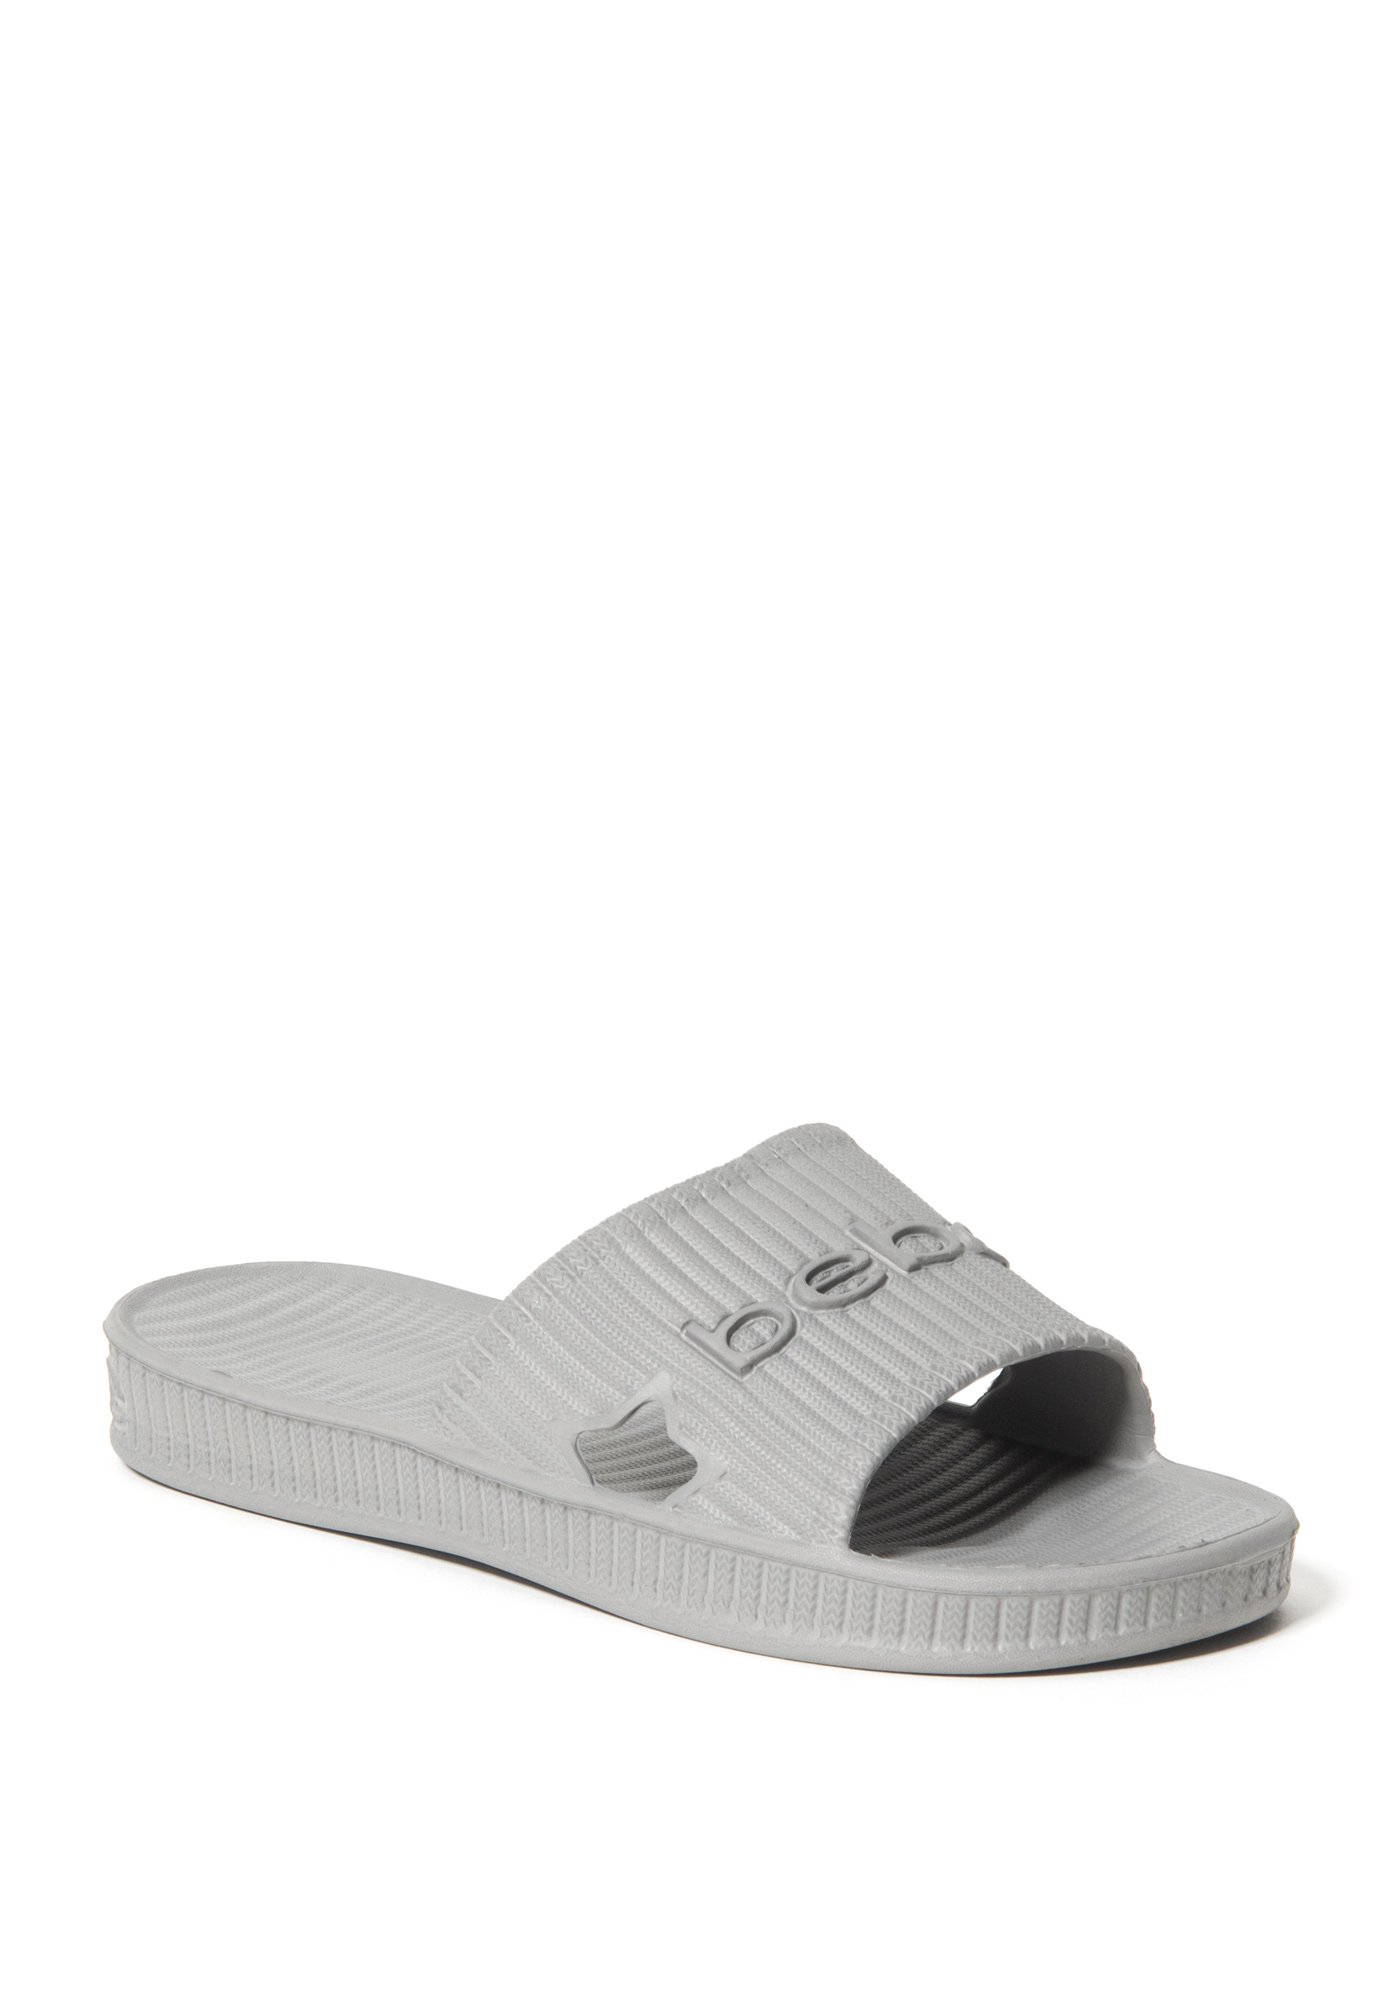 Bebe Women's Craze Logo Slides Shoe, Size 7 in Grey Synthetic